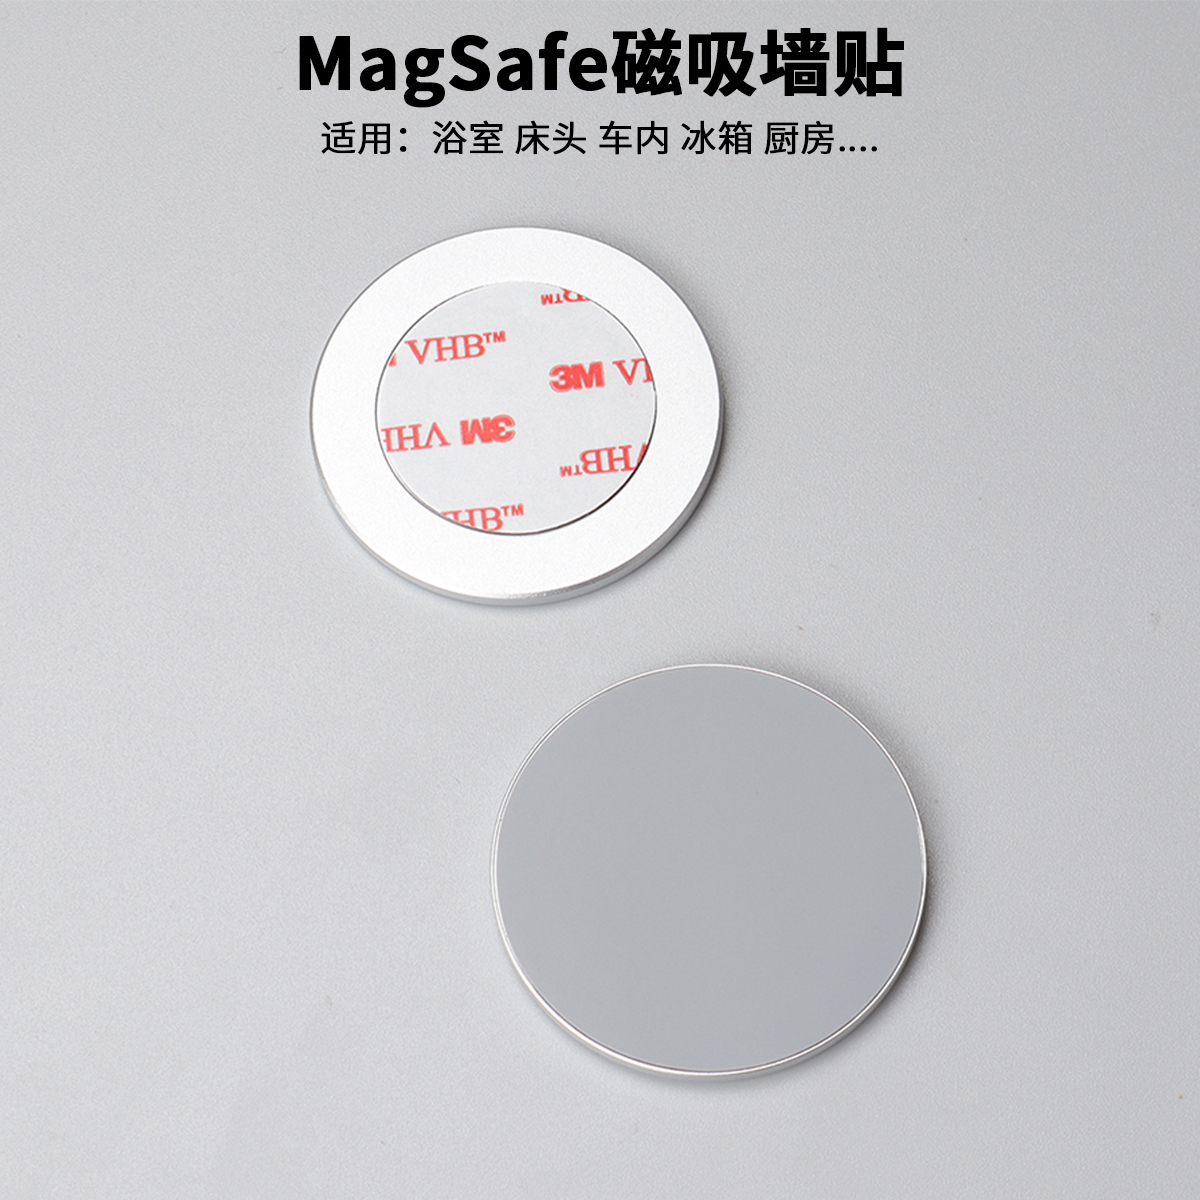 magsafe磁吸墙贴金属引磁片手机车载磁吸支架适浴室厨房贴片